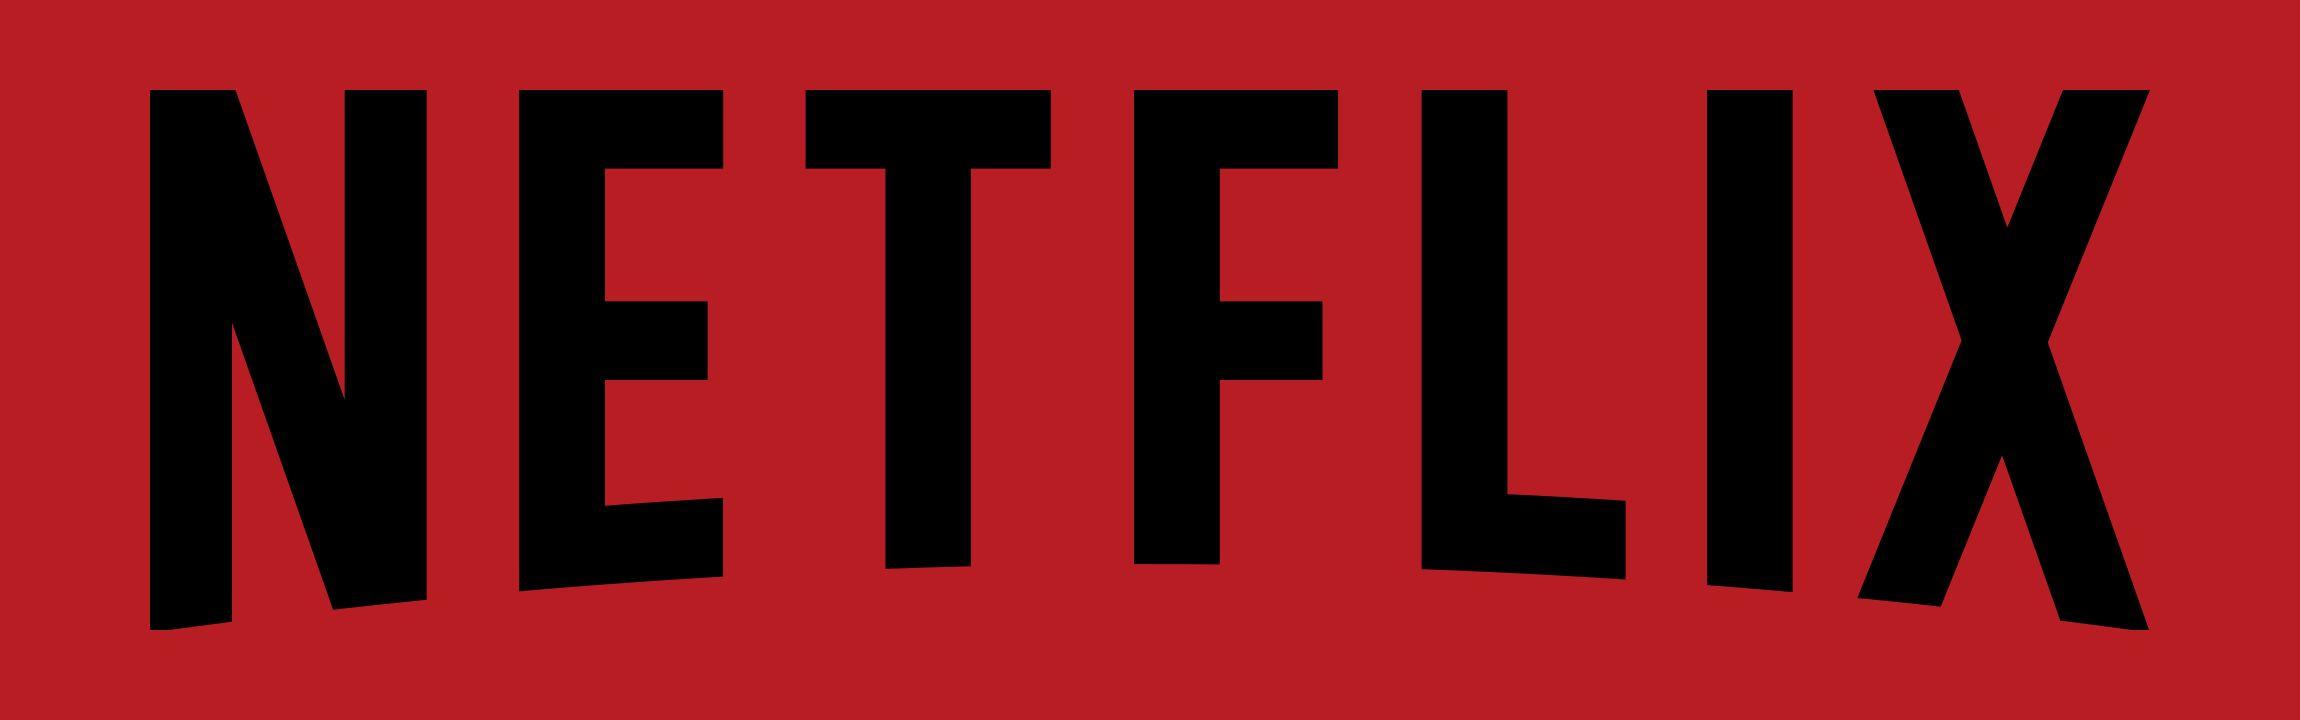 Netflicks Logo - Netflix Logo, Netflix Symbol, Meaning, History and Evolution